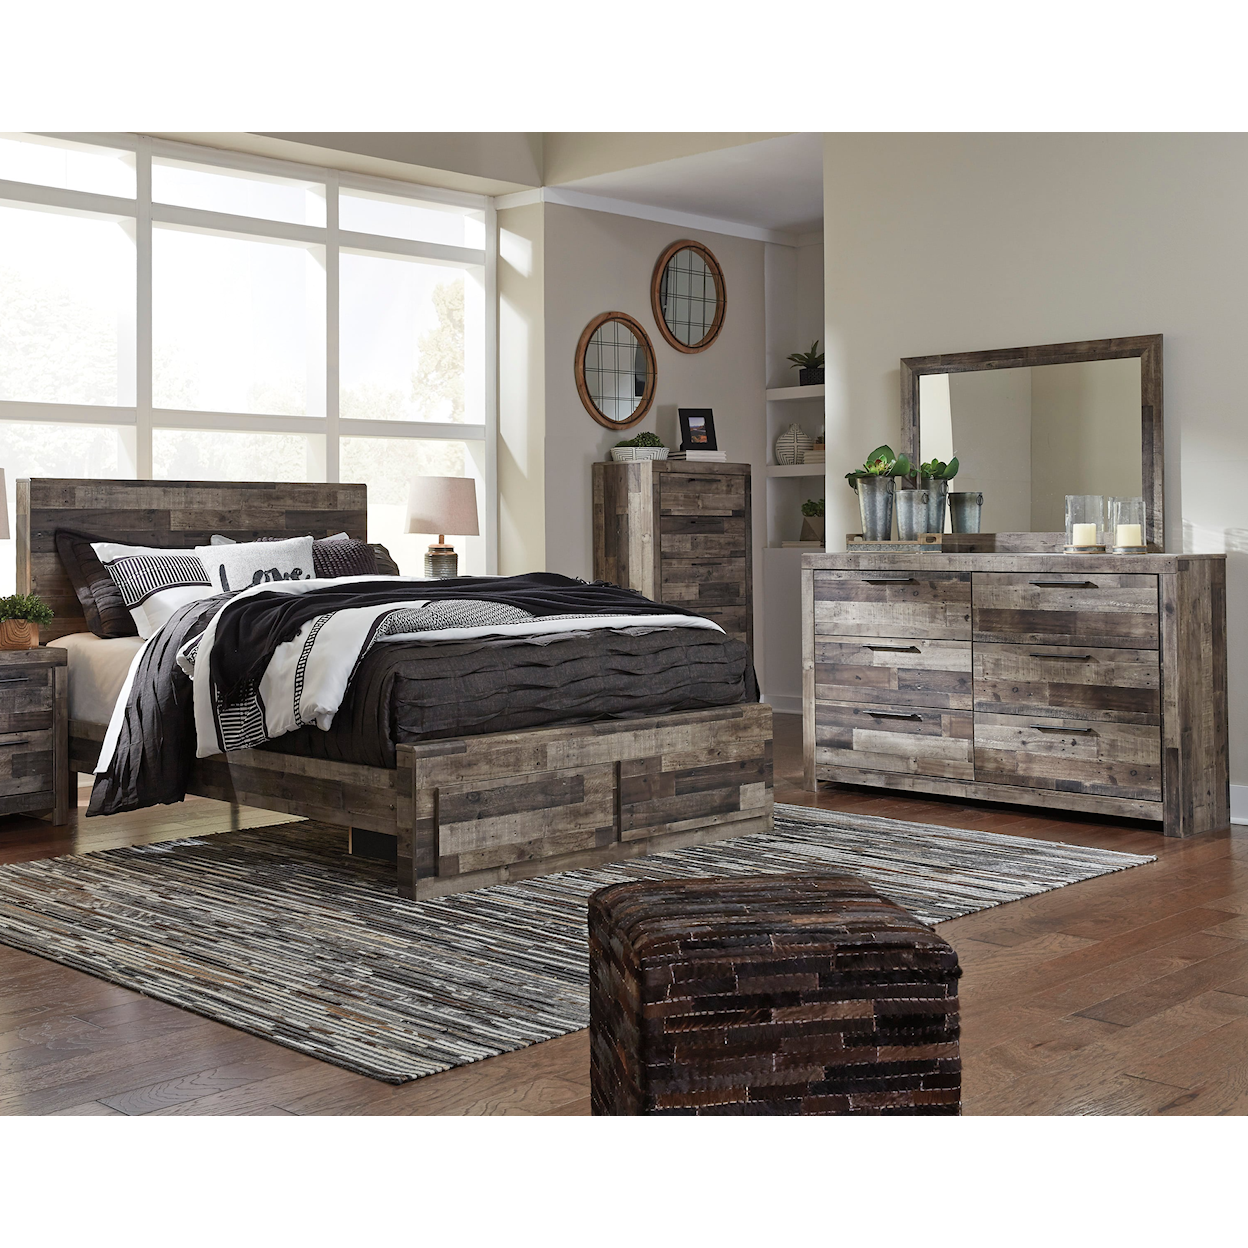 Ashley Furniture Benchcraft Derekson Queen Bedroom Group